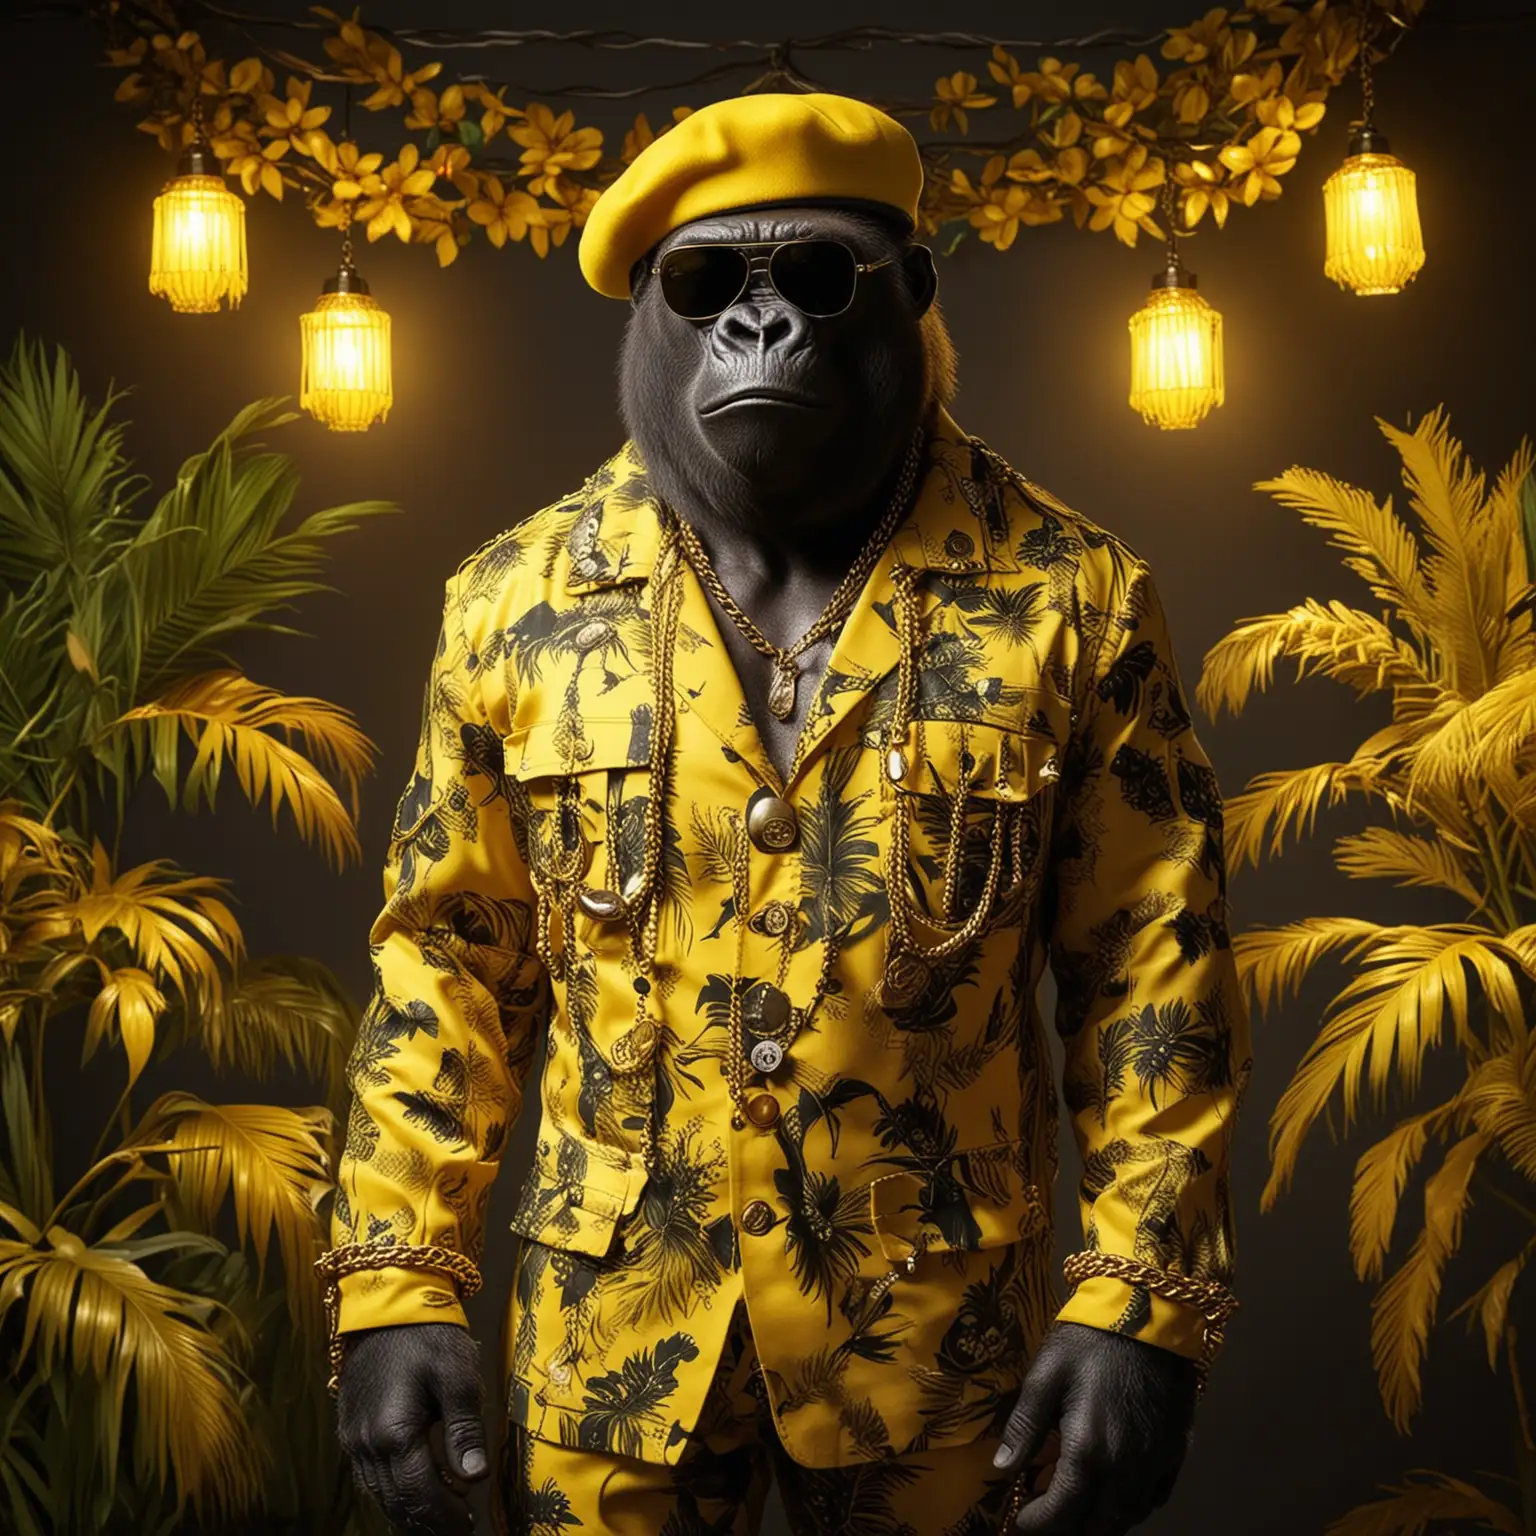 Gorilla in Yellow Hawaiian Military Attire with Ornate Accessories Under Neon Lights